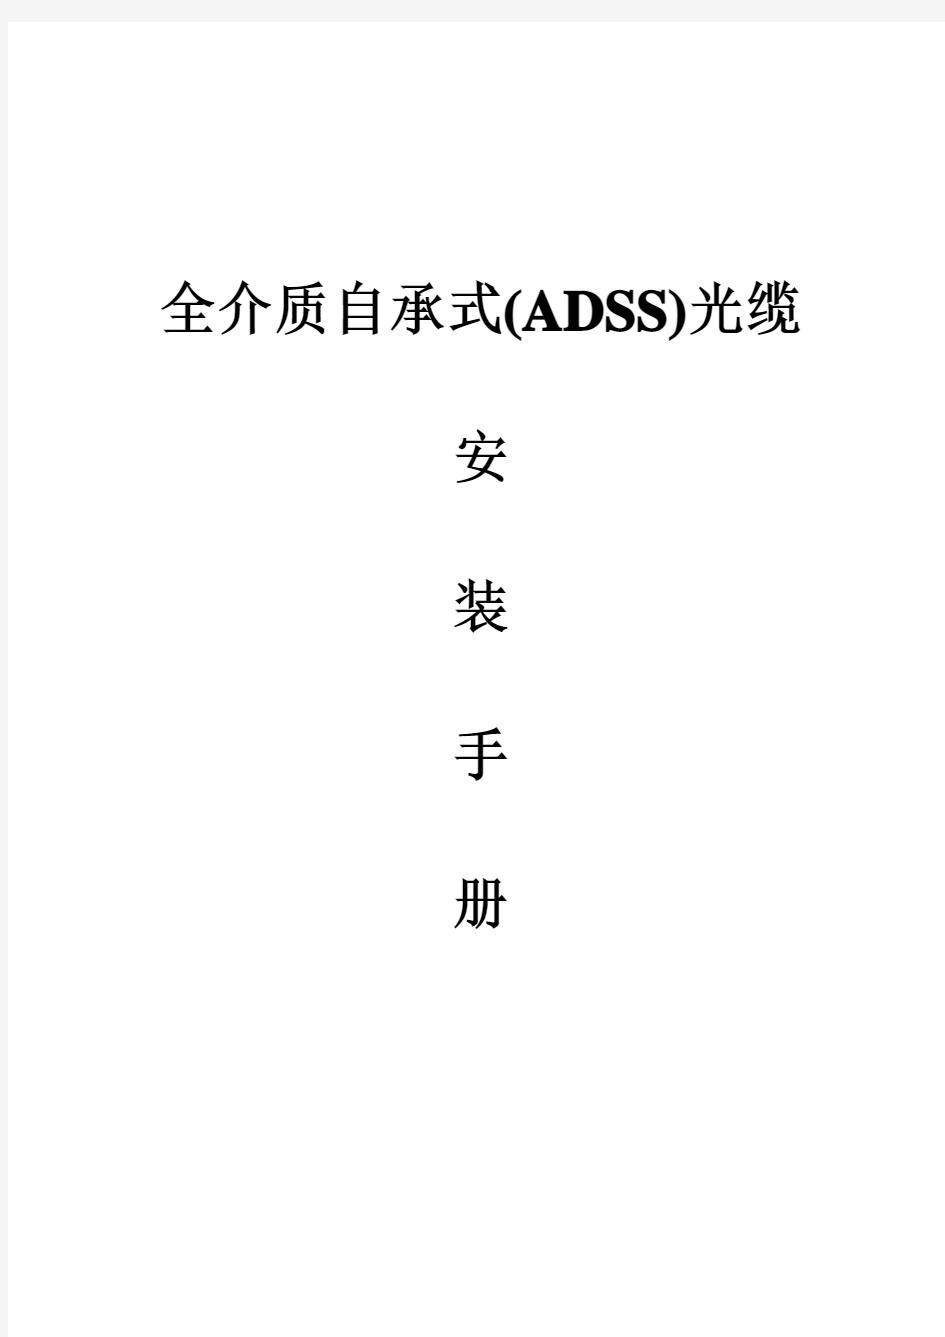 ADSS光缆安装、施工工艺手册